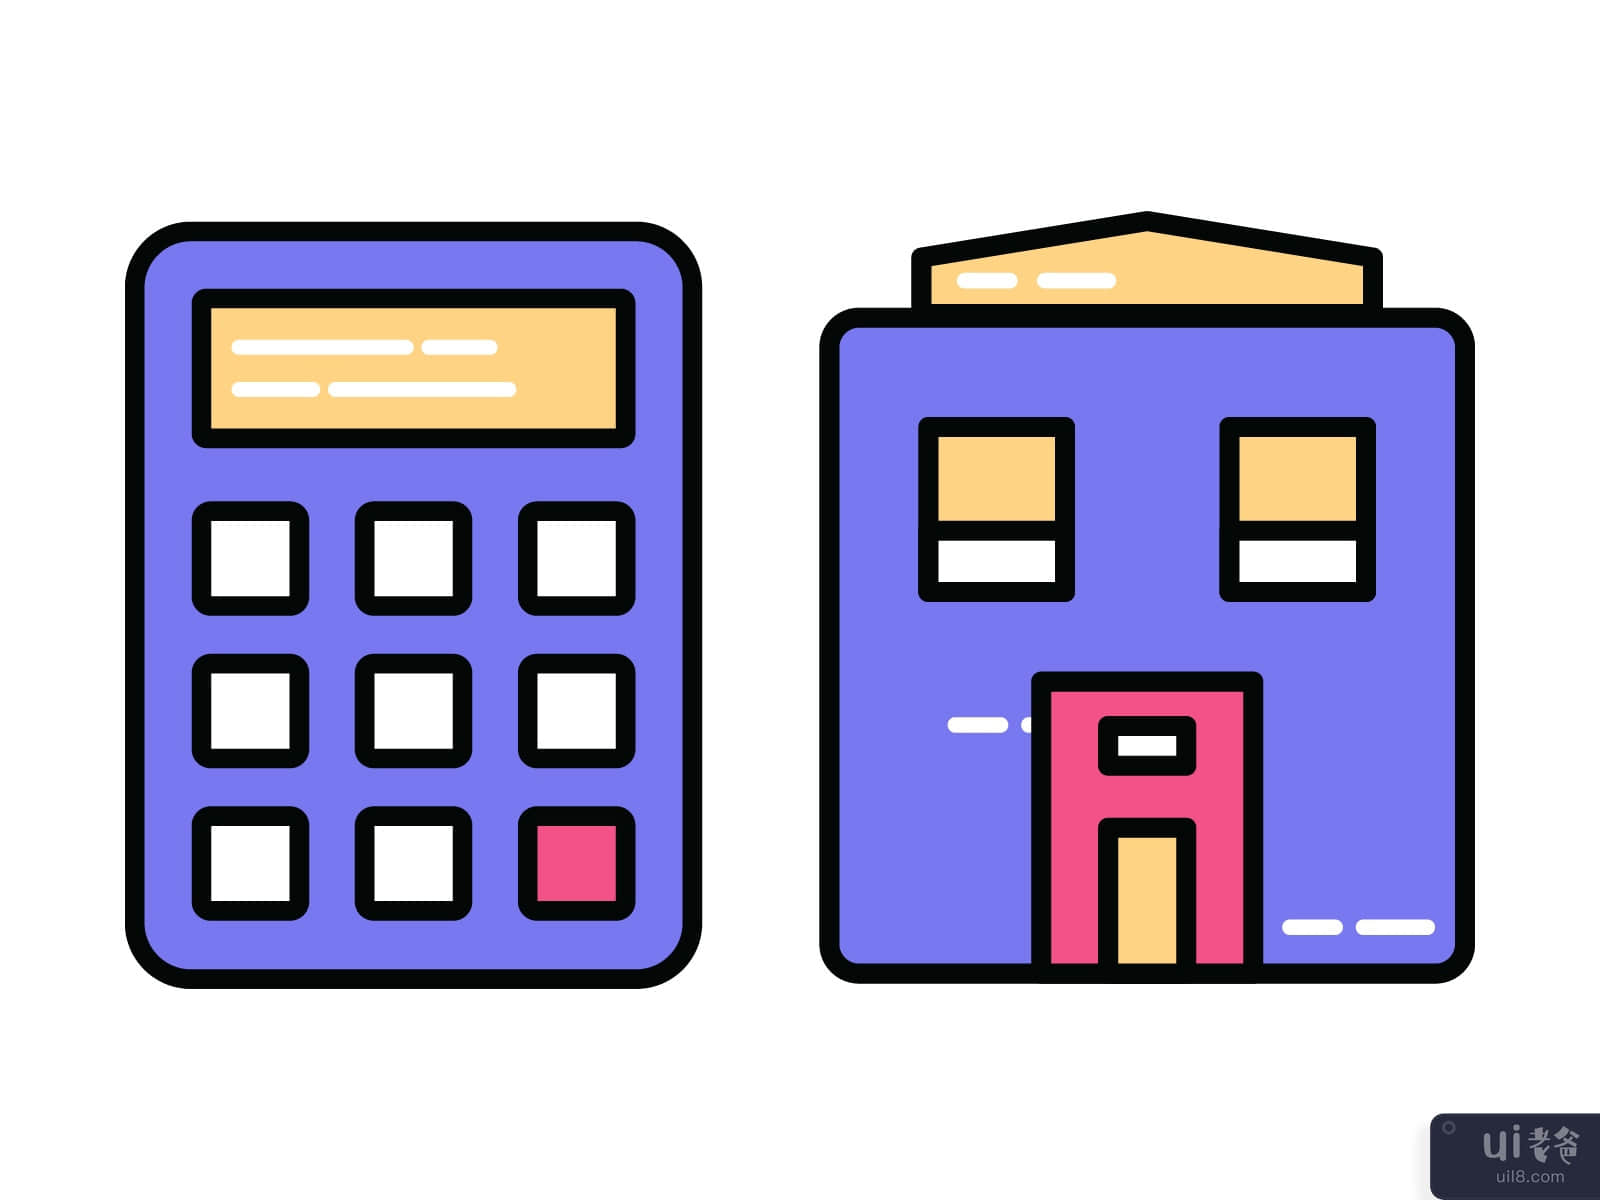 Building and calculator icon